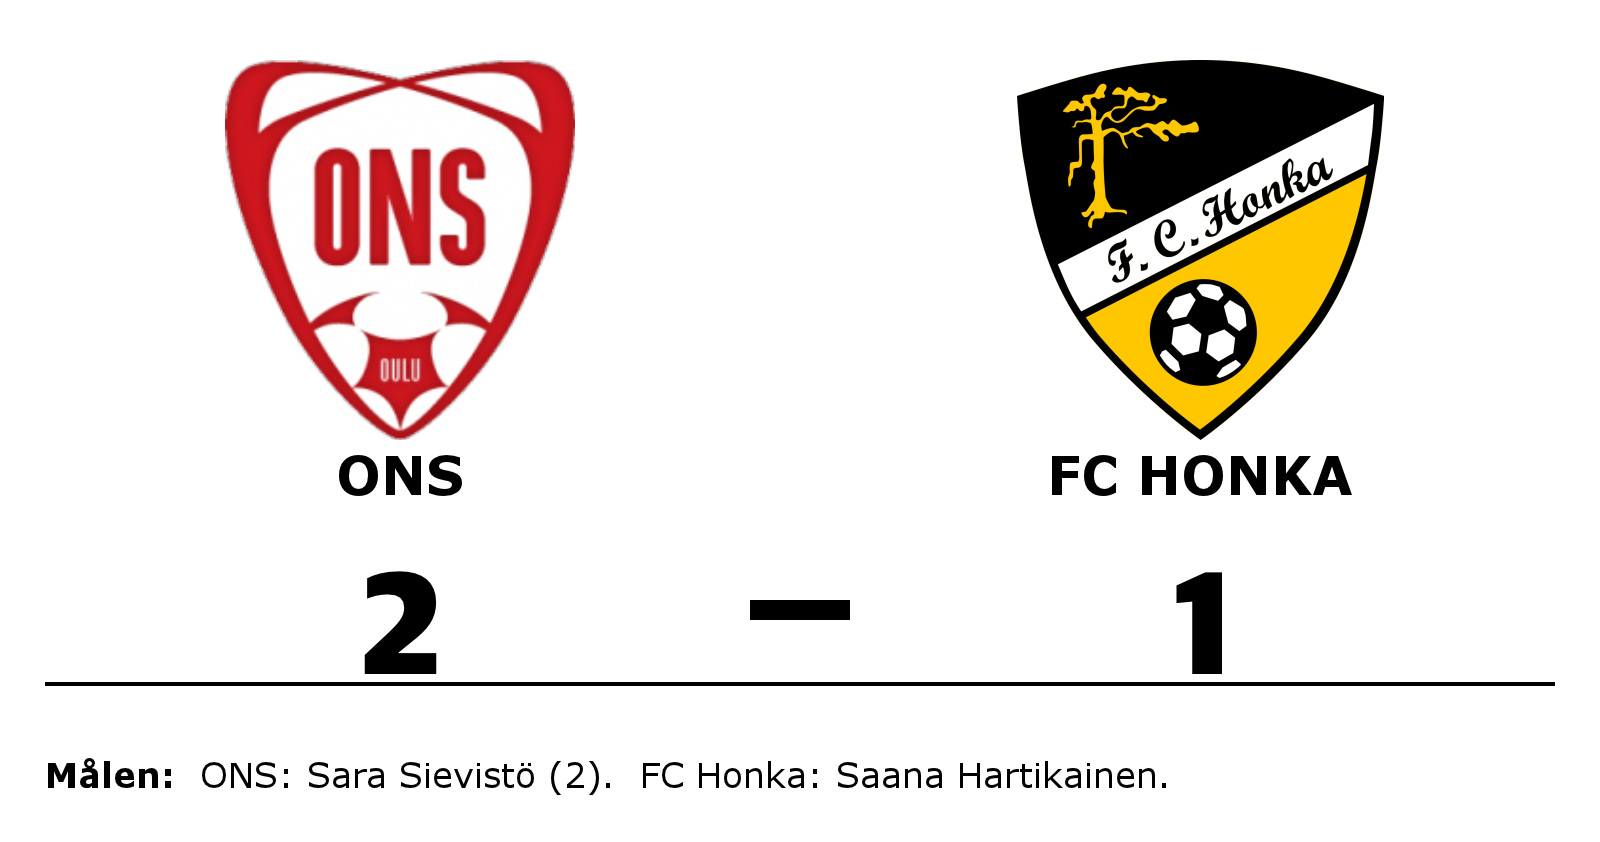 ONS vann mot FC Honka